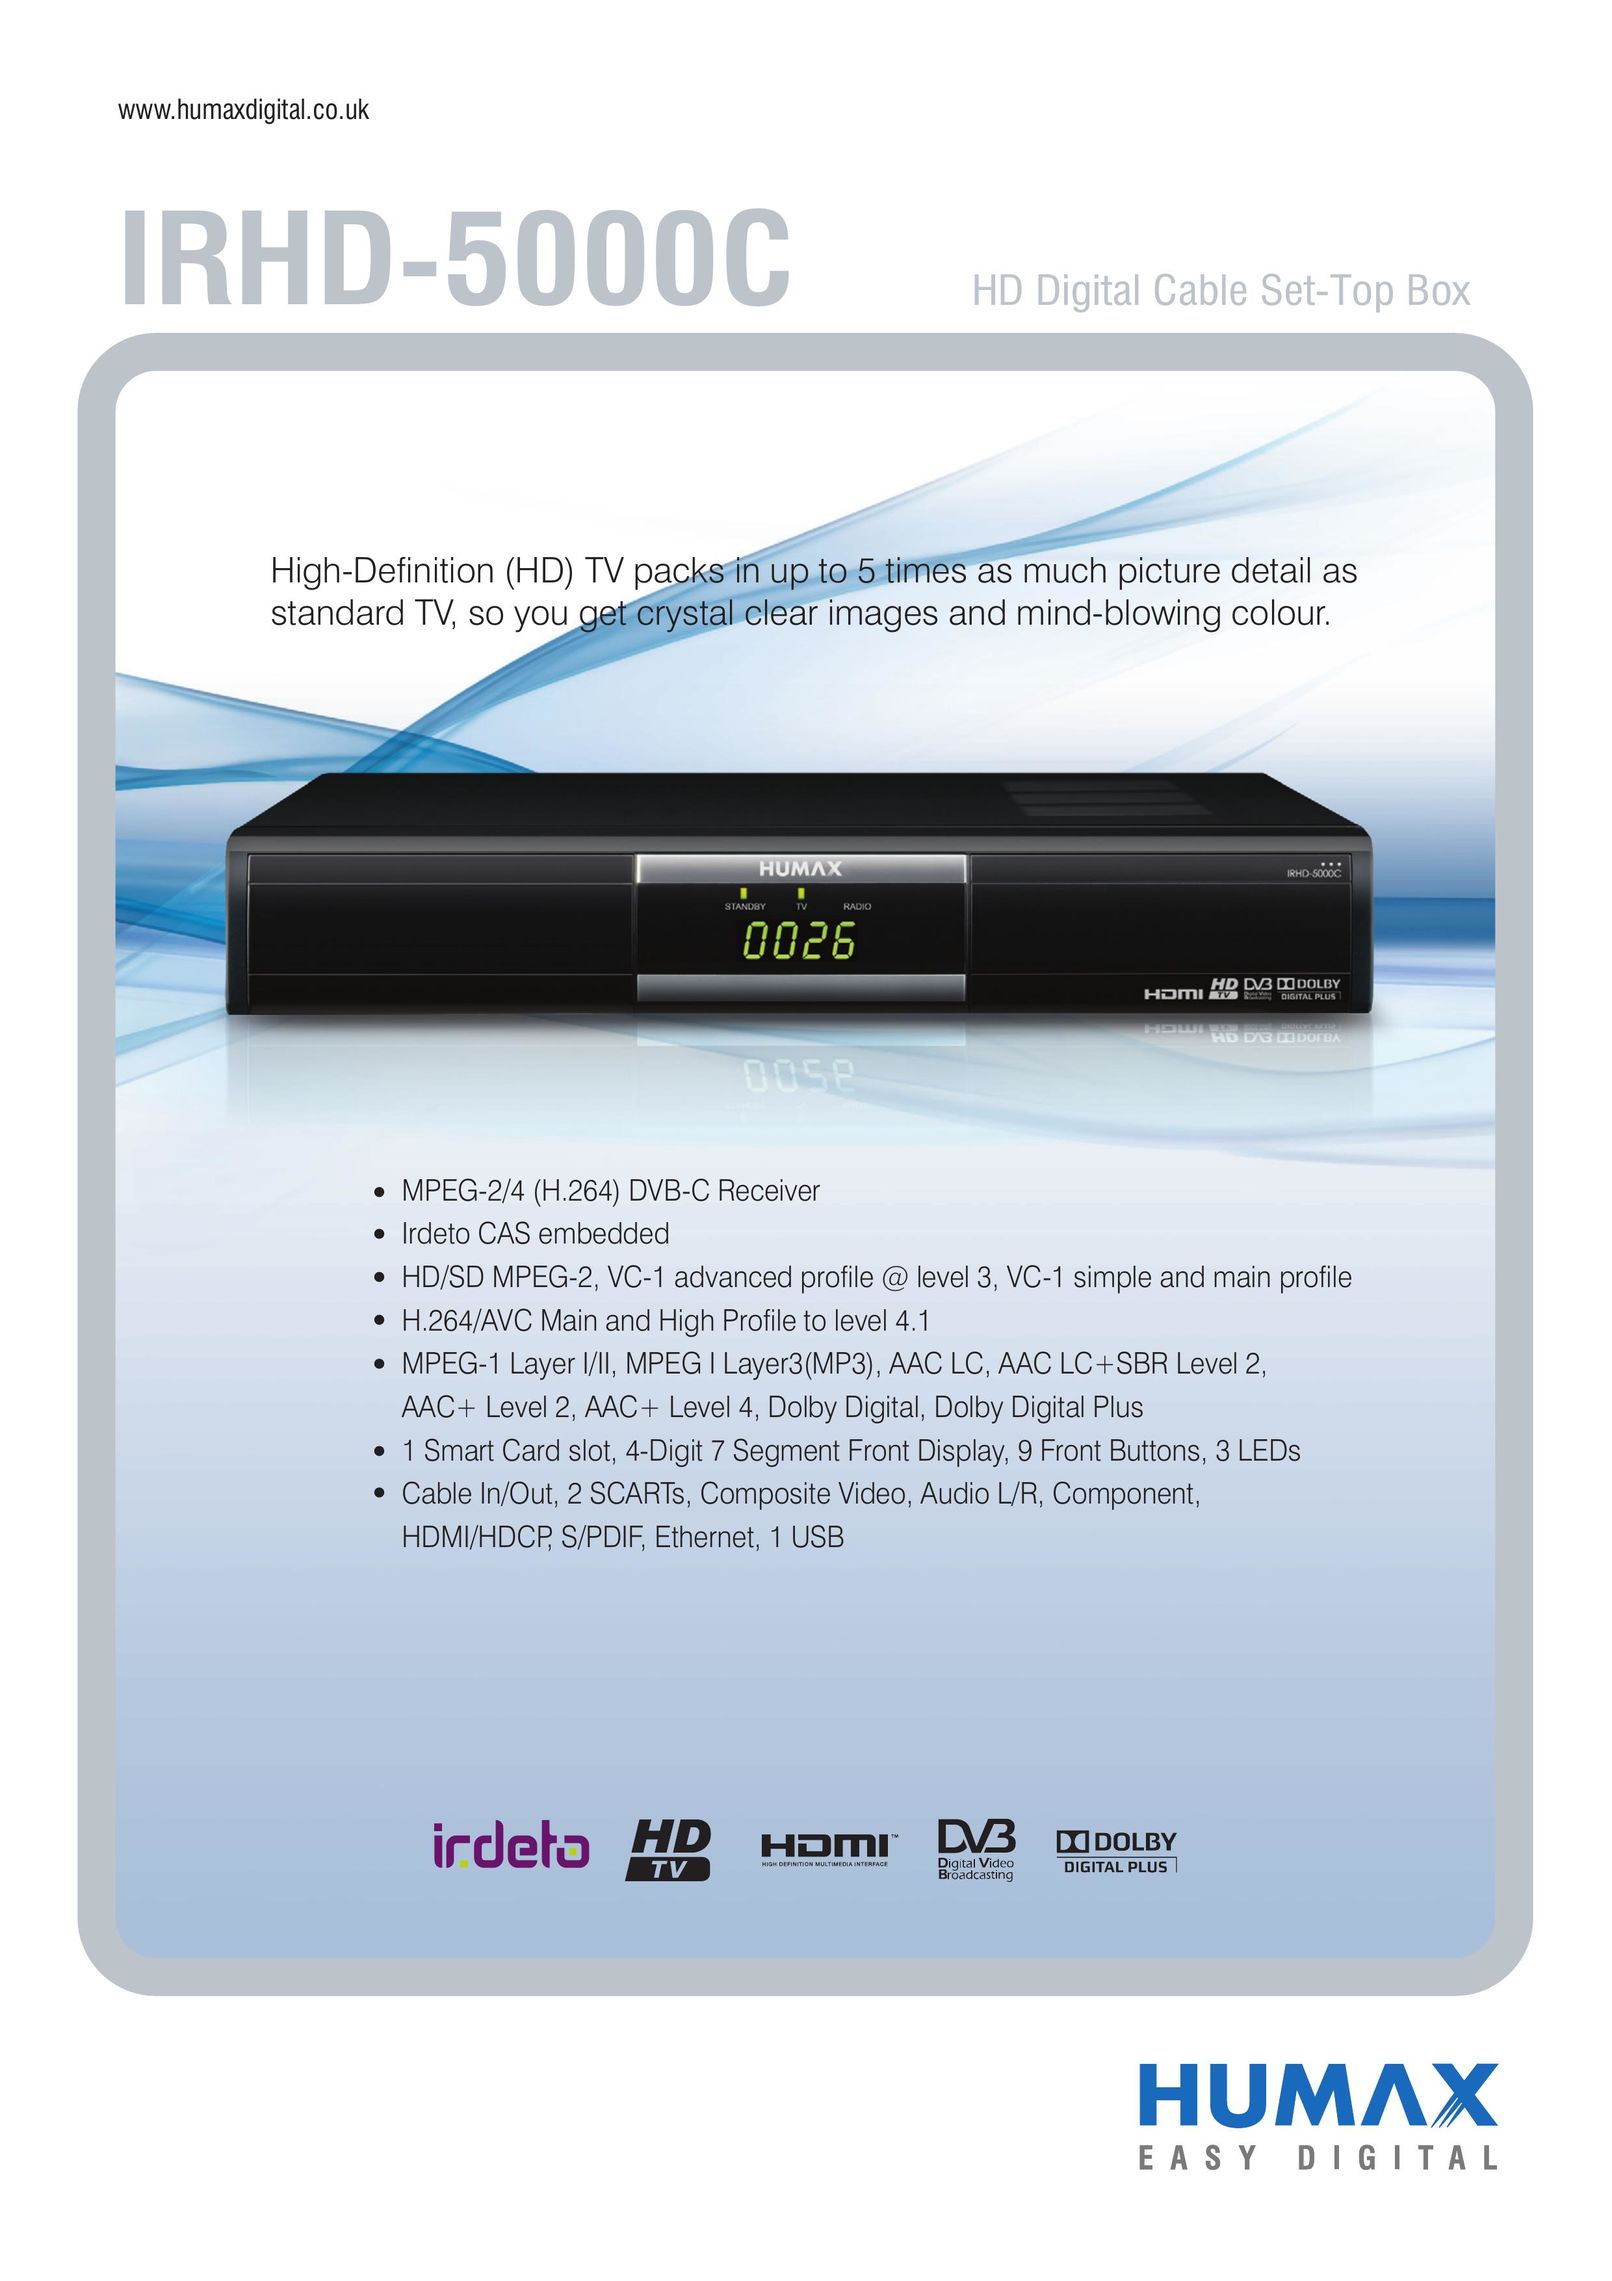 Humax IRHD-5000C DVR User Manual